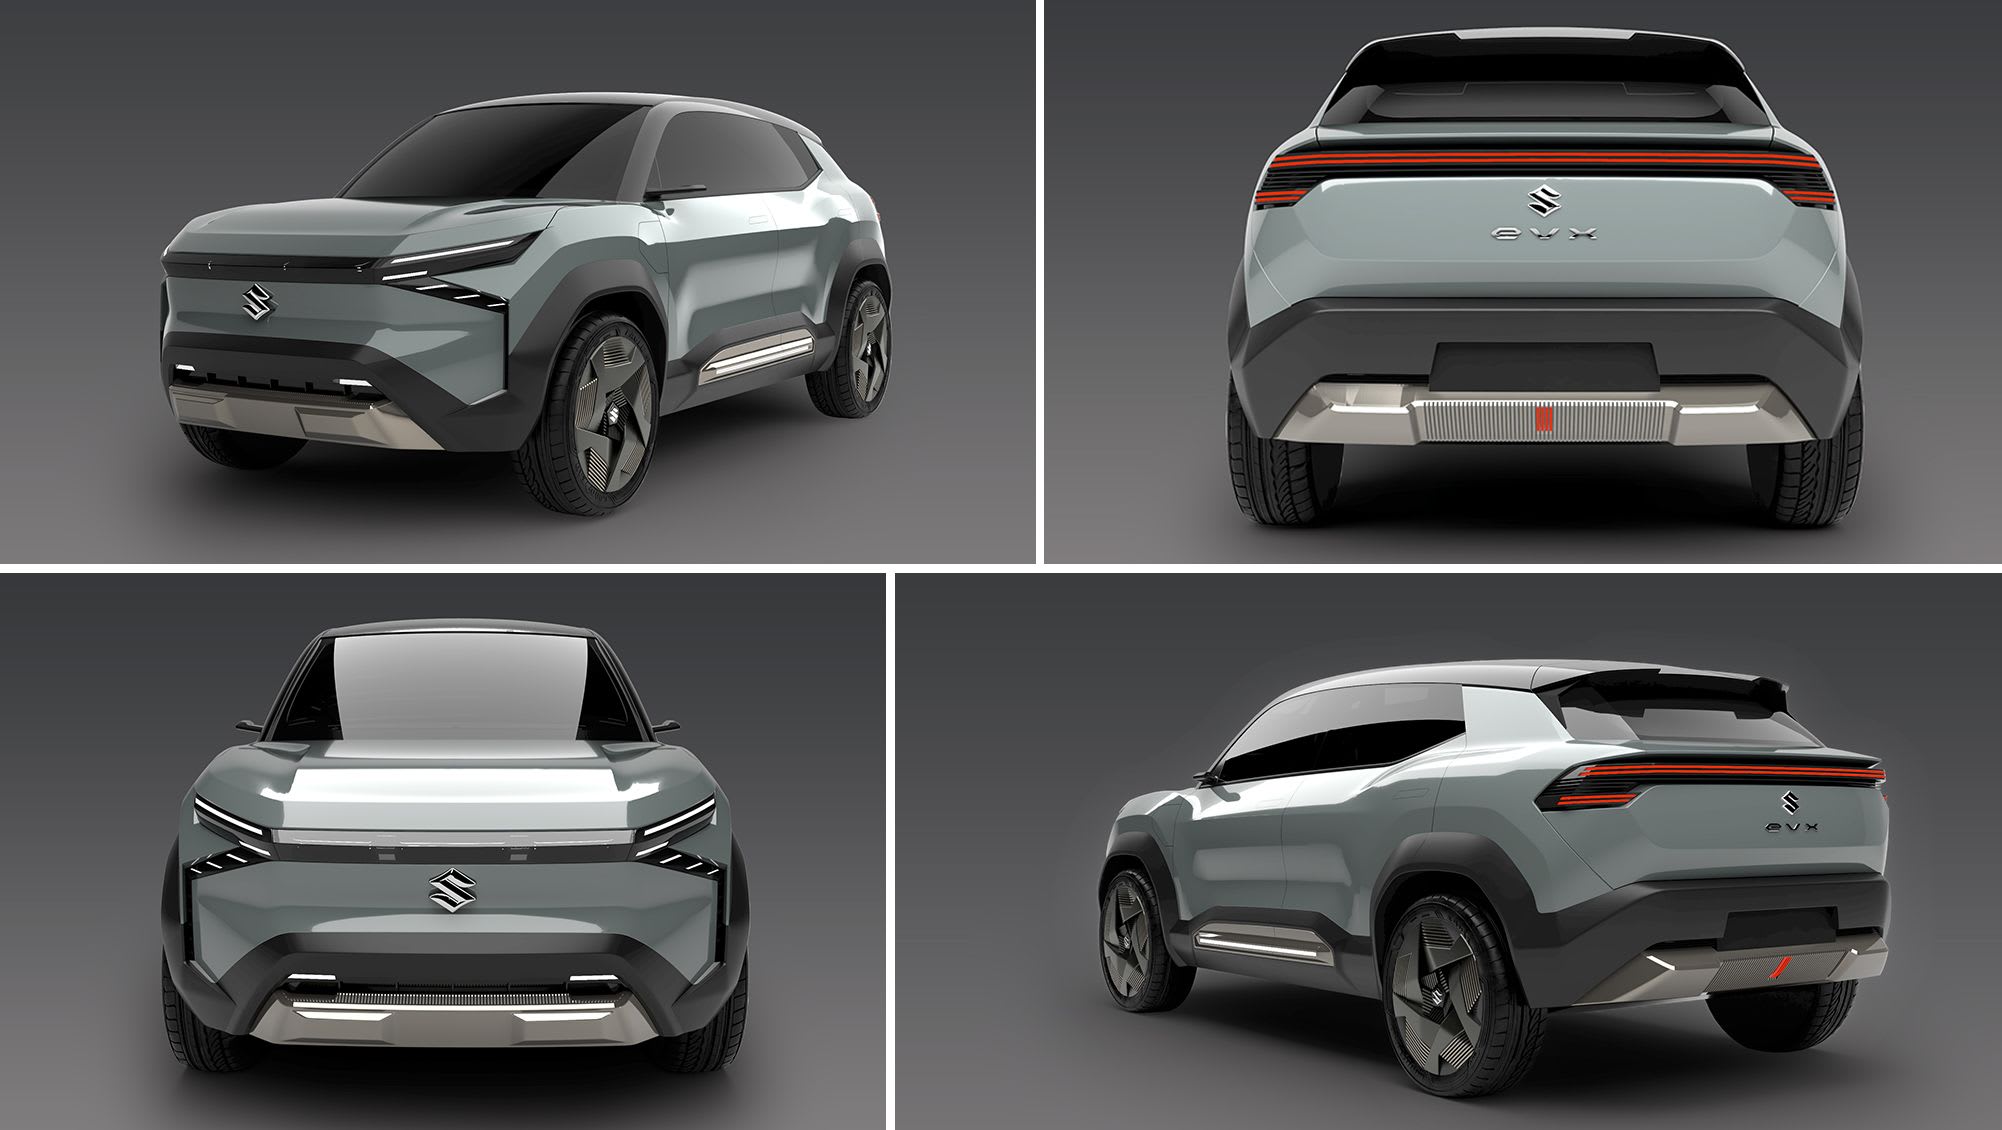 Suzuki eVX concept previews production electric car that could face off